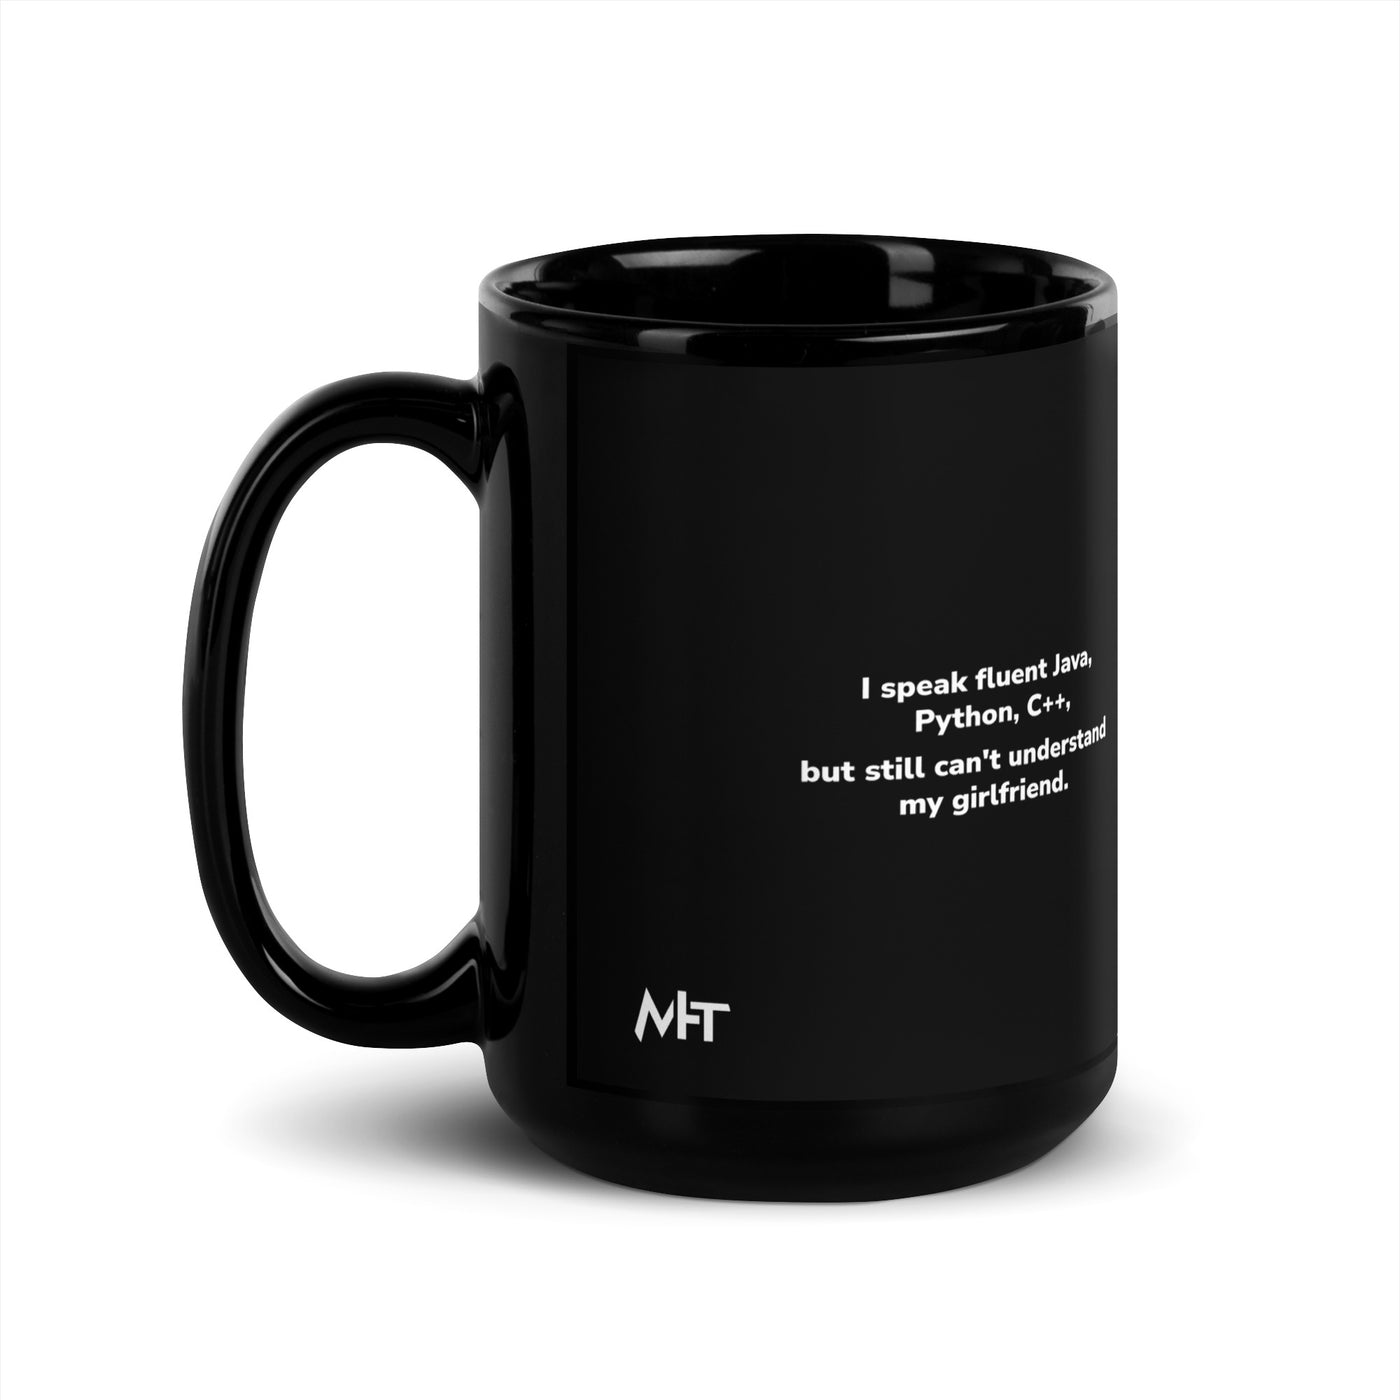 I Speak Fluent Java, Python, C++, but still can't understand my girlfriend V2 - Black Glossy Mug